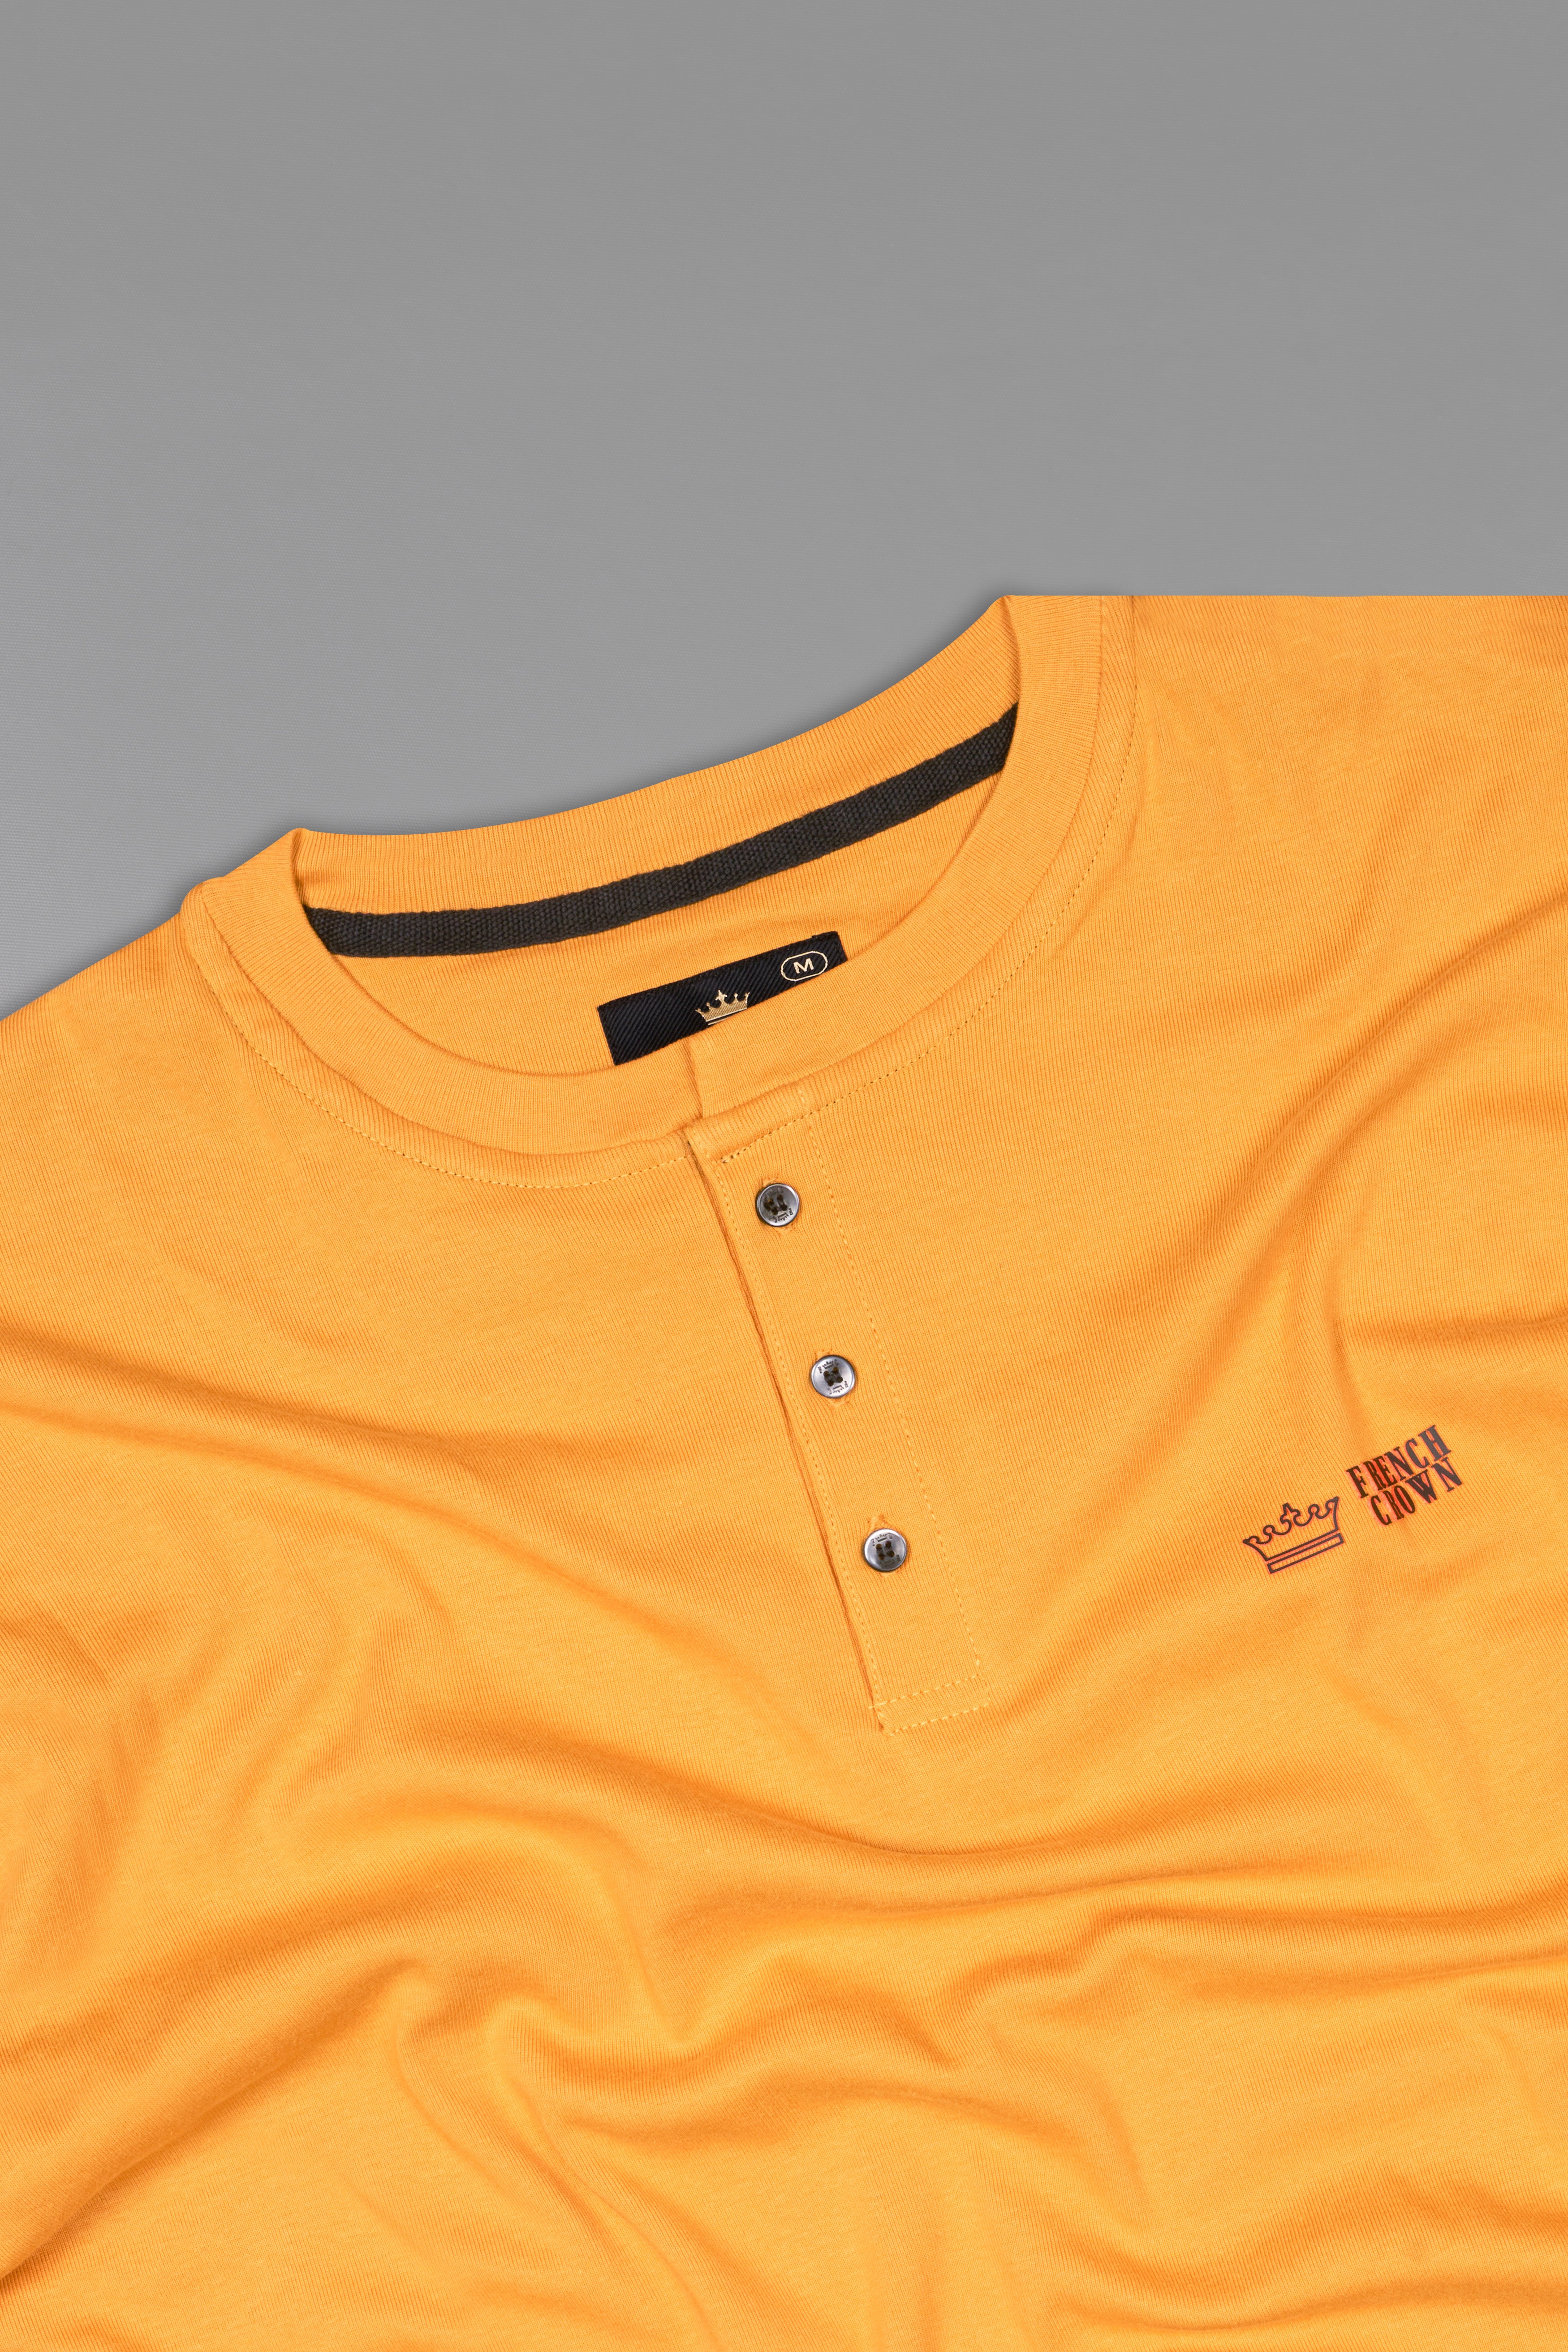 Butterscotch Orange Premium Cotton Round Neck Jersey T-Shirt TS915-S, TS915-M, TS915-L, TS915-XL, TS915-XXL